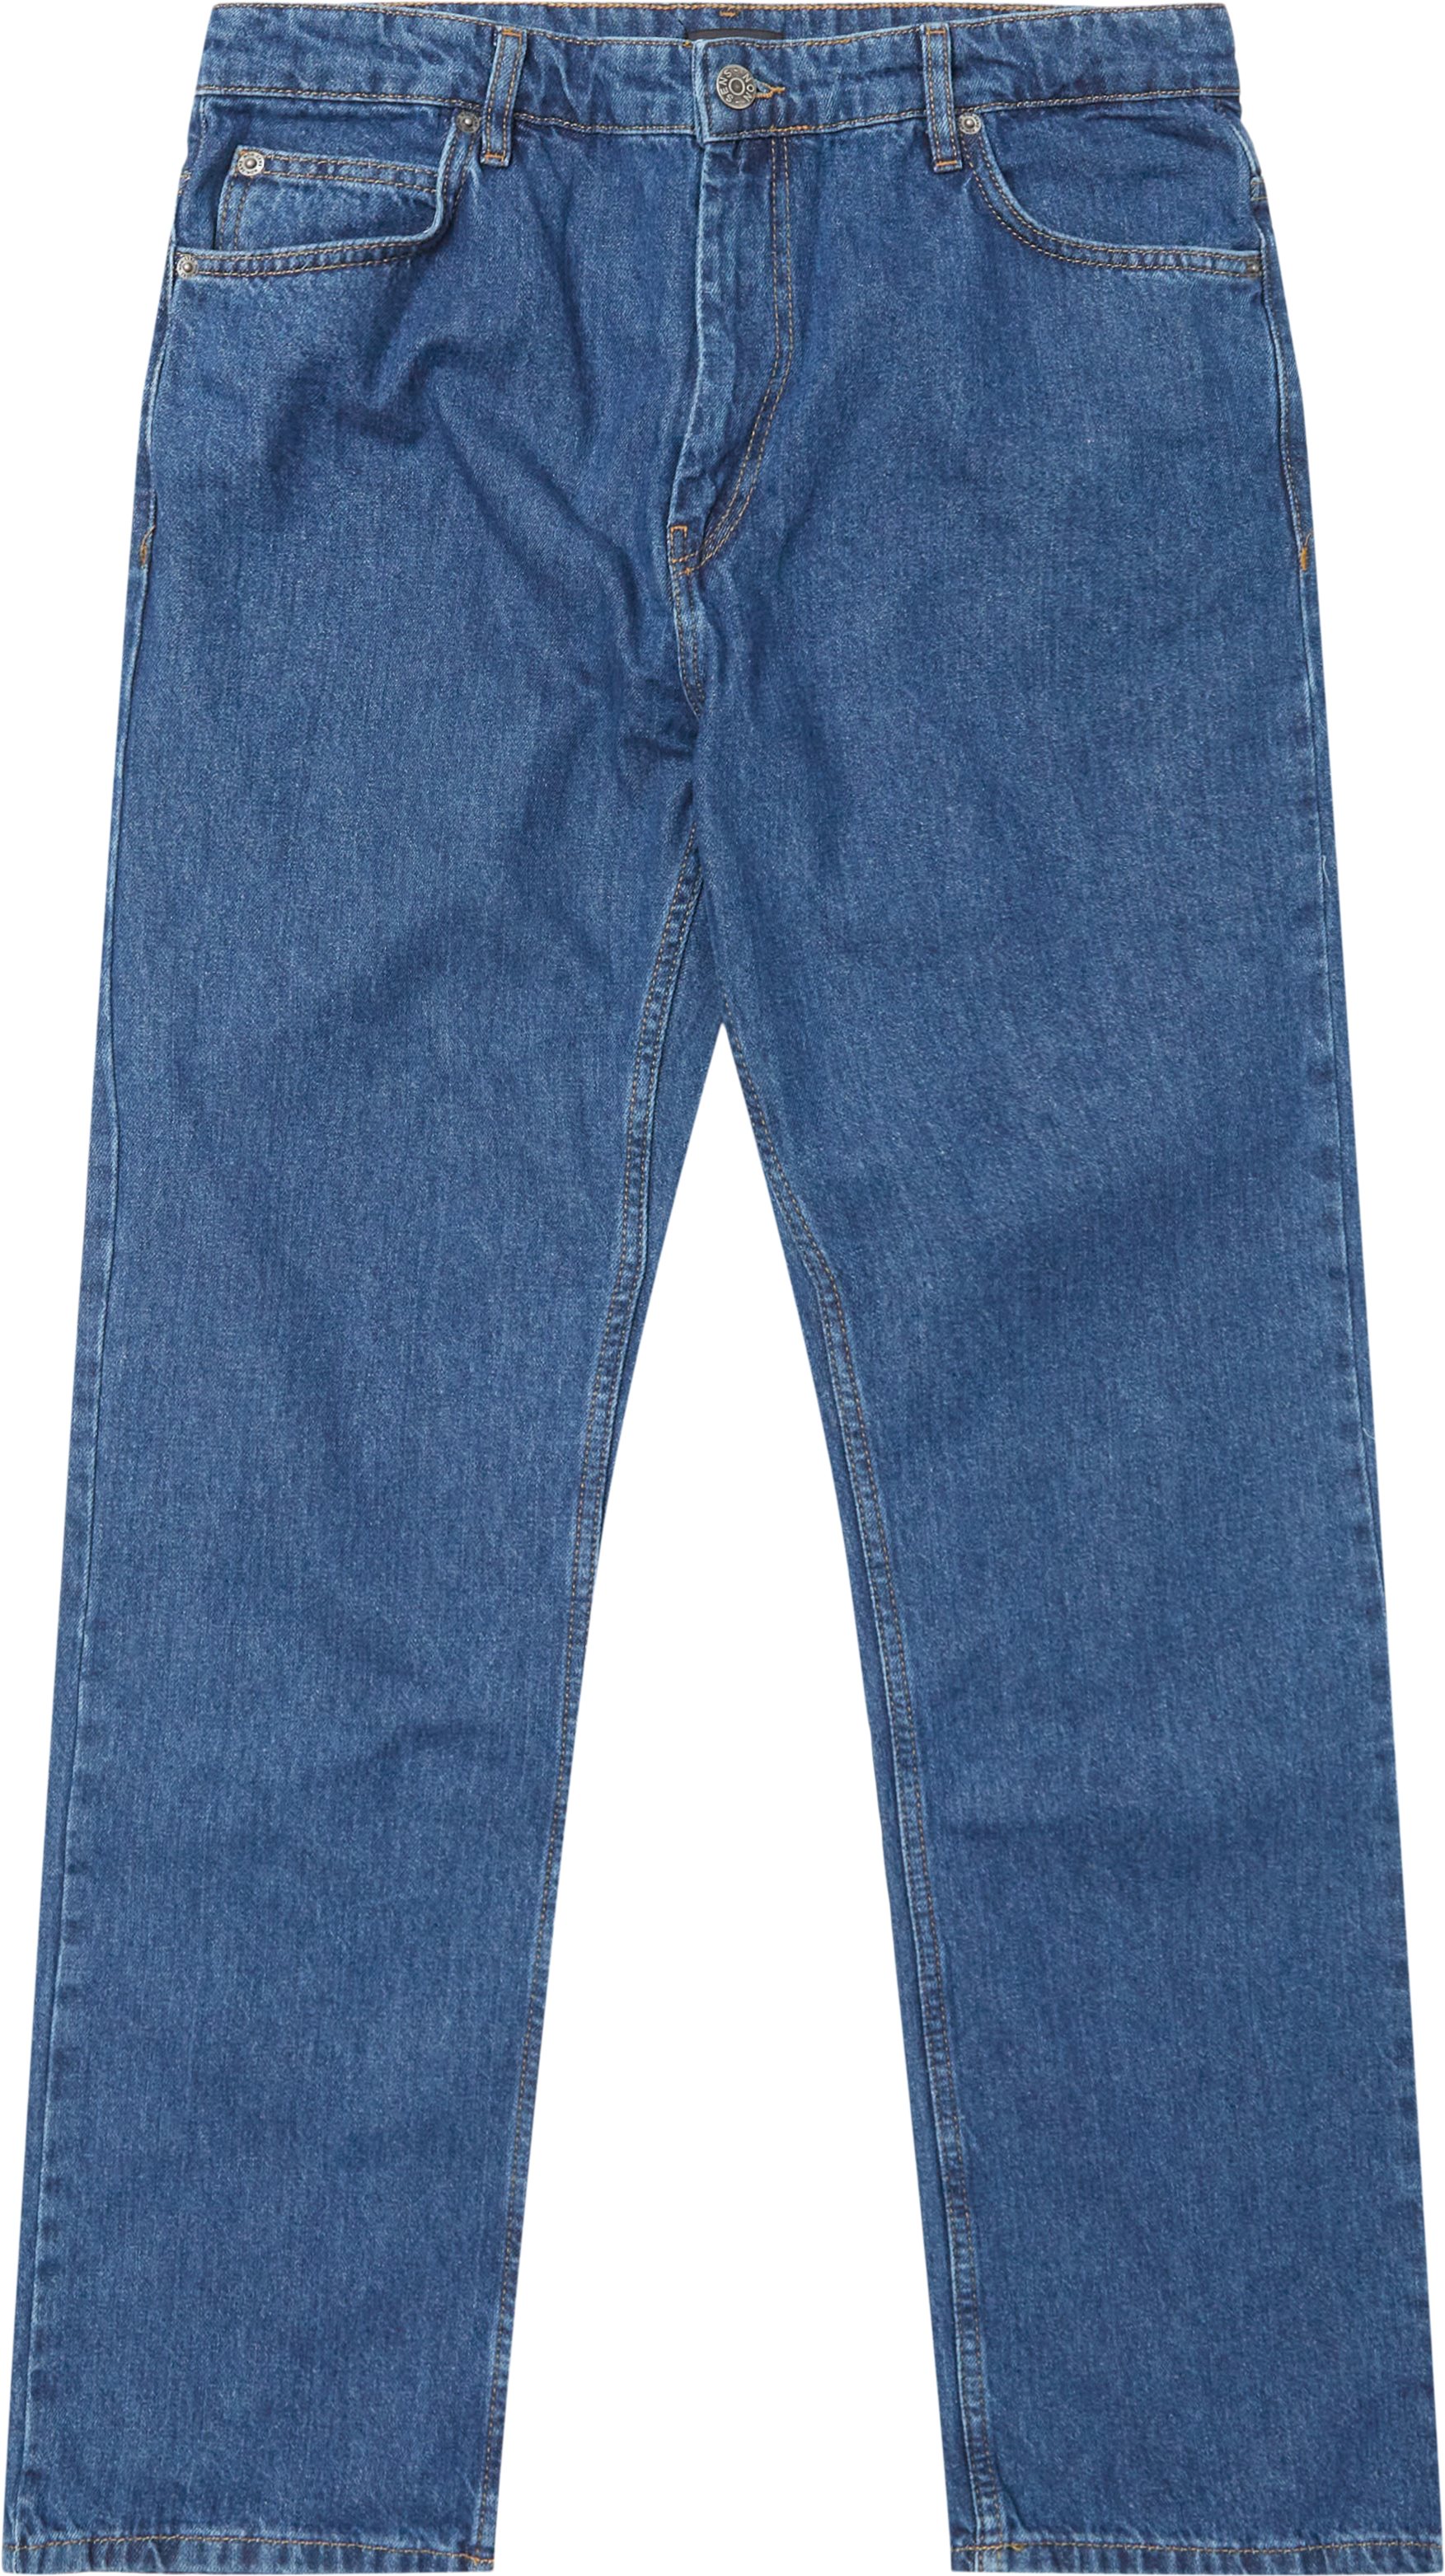 Vermont Jeans - Jeans - Straight fit - Denim